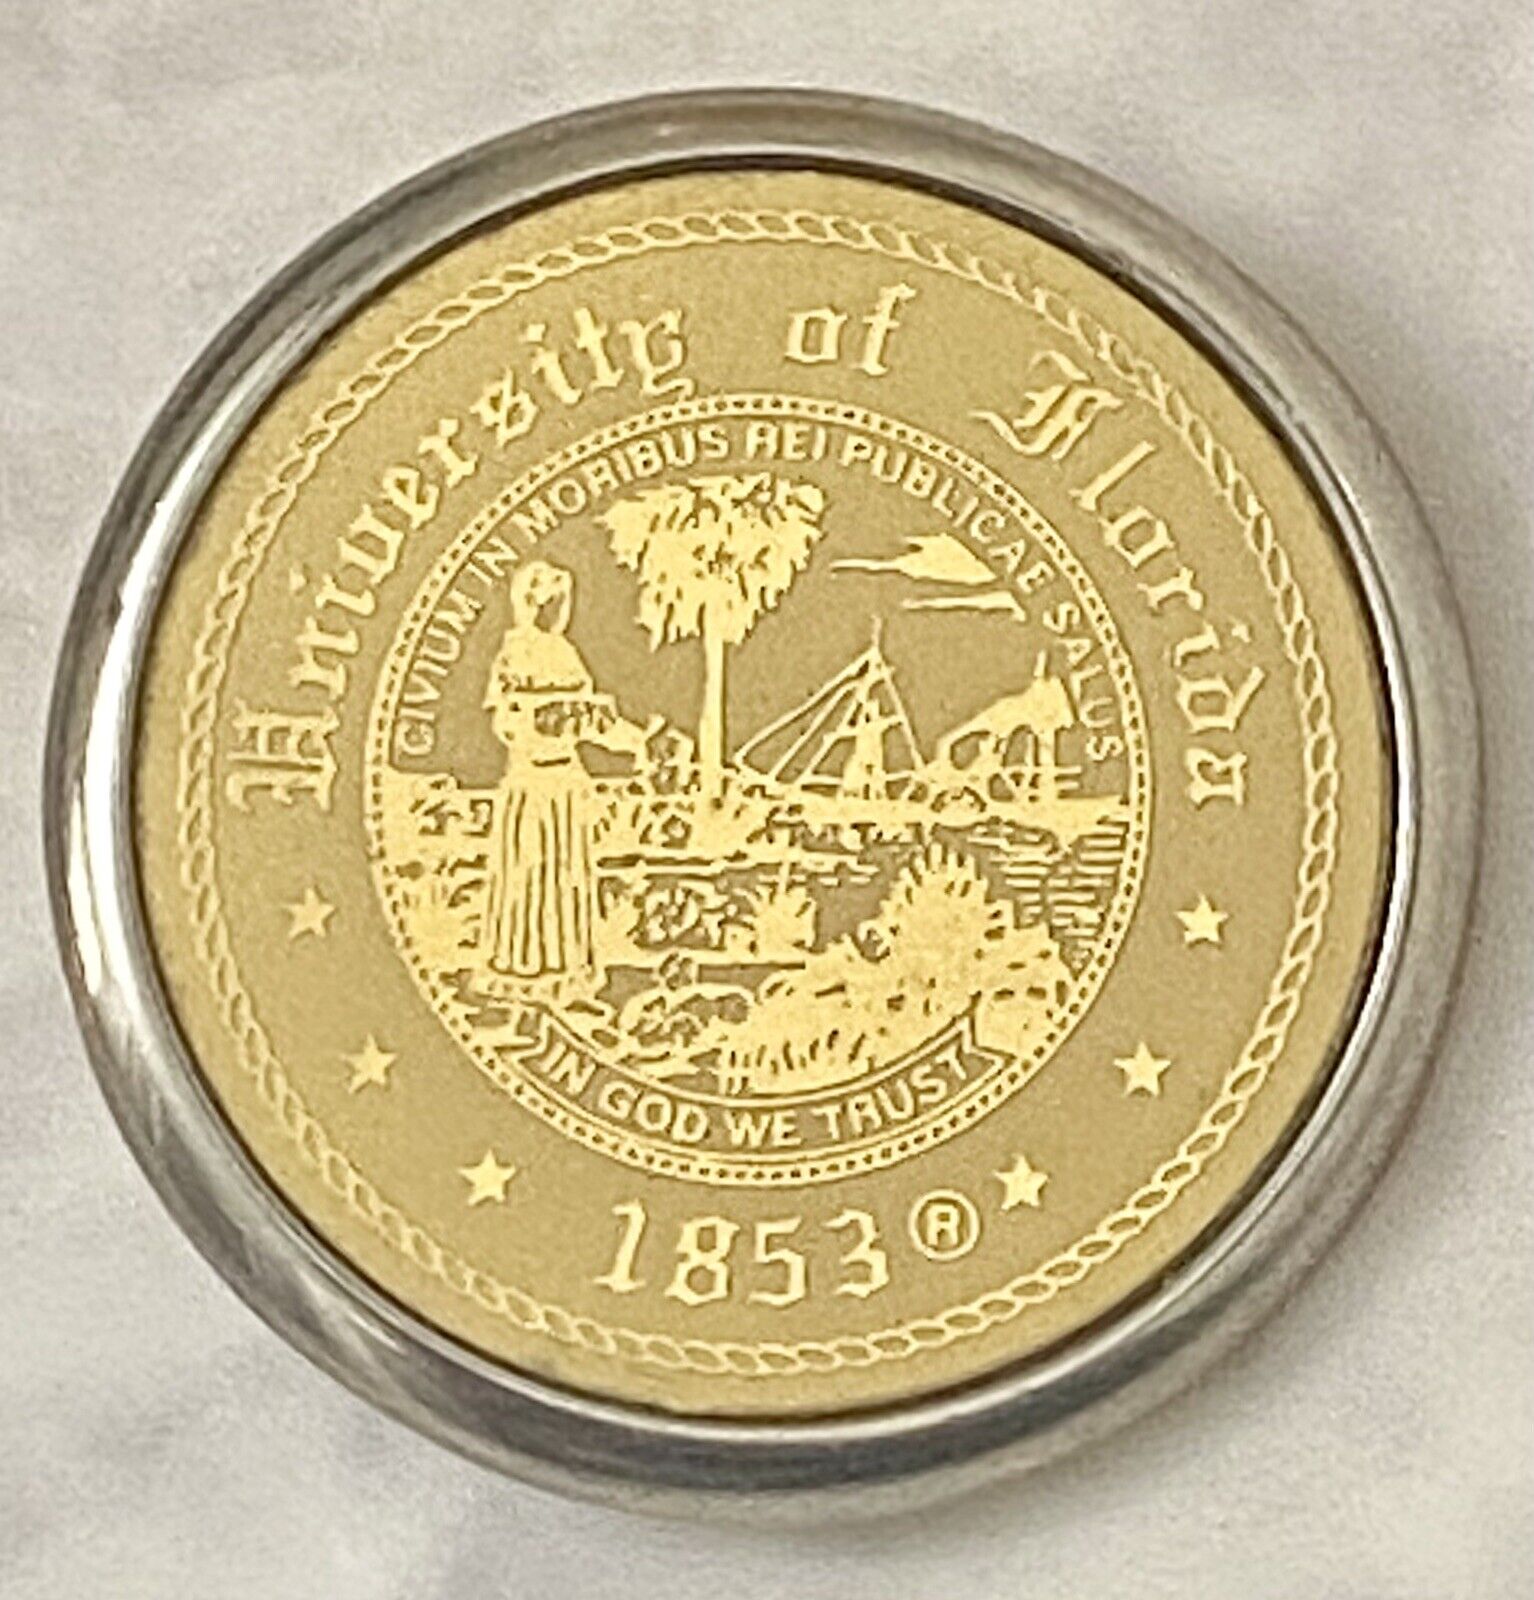 Florida Gators University of Florida Metal Button - Vintage